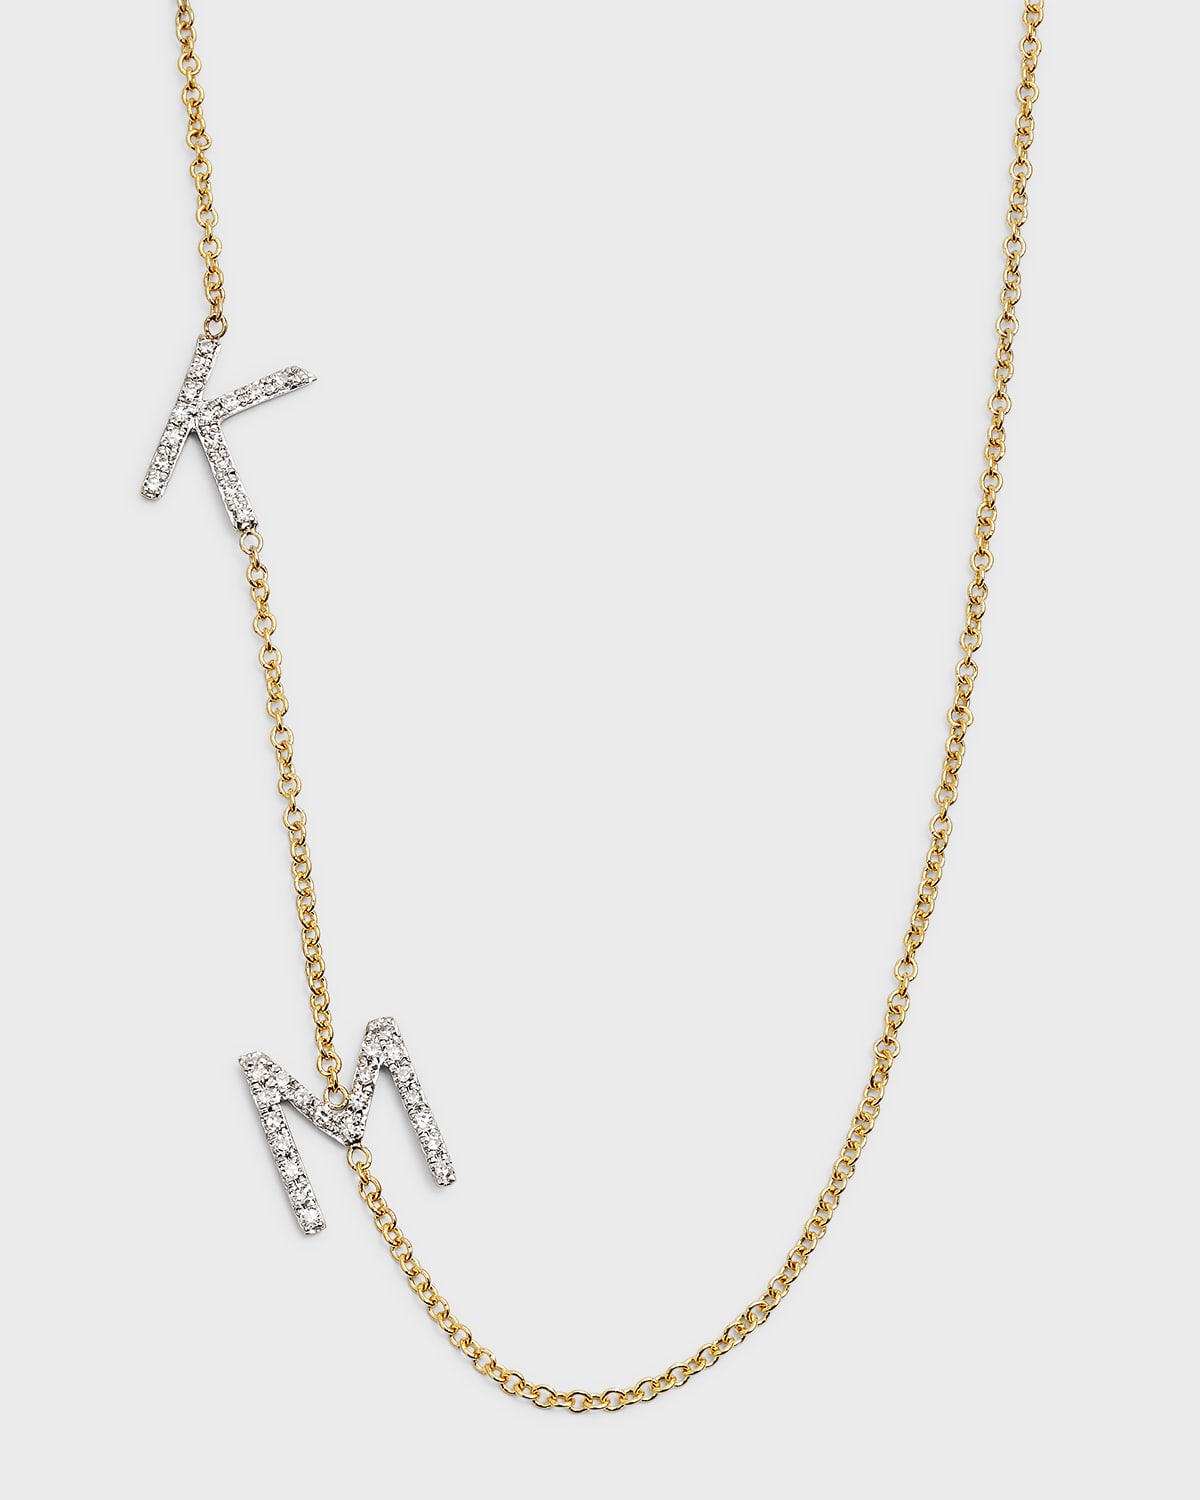 Zoe Lev Jewelry 14k Yellow Gold Personalized Asymmetric Two-initial Necklace With Diamonds